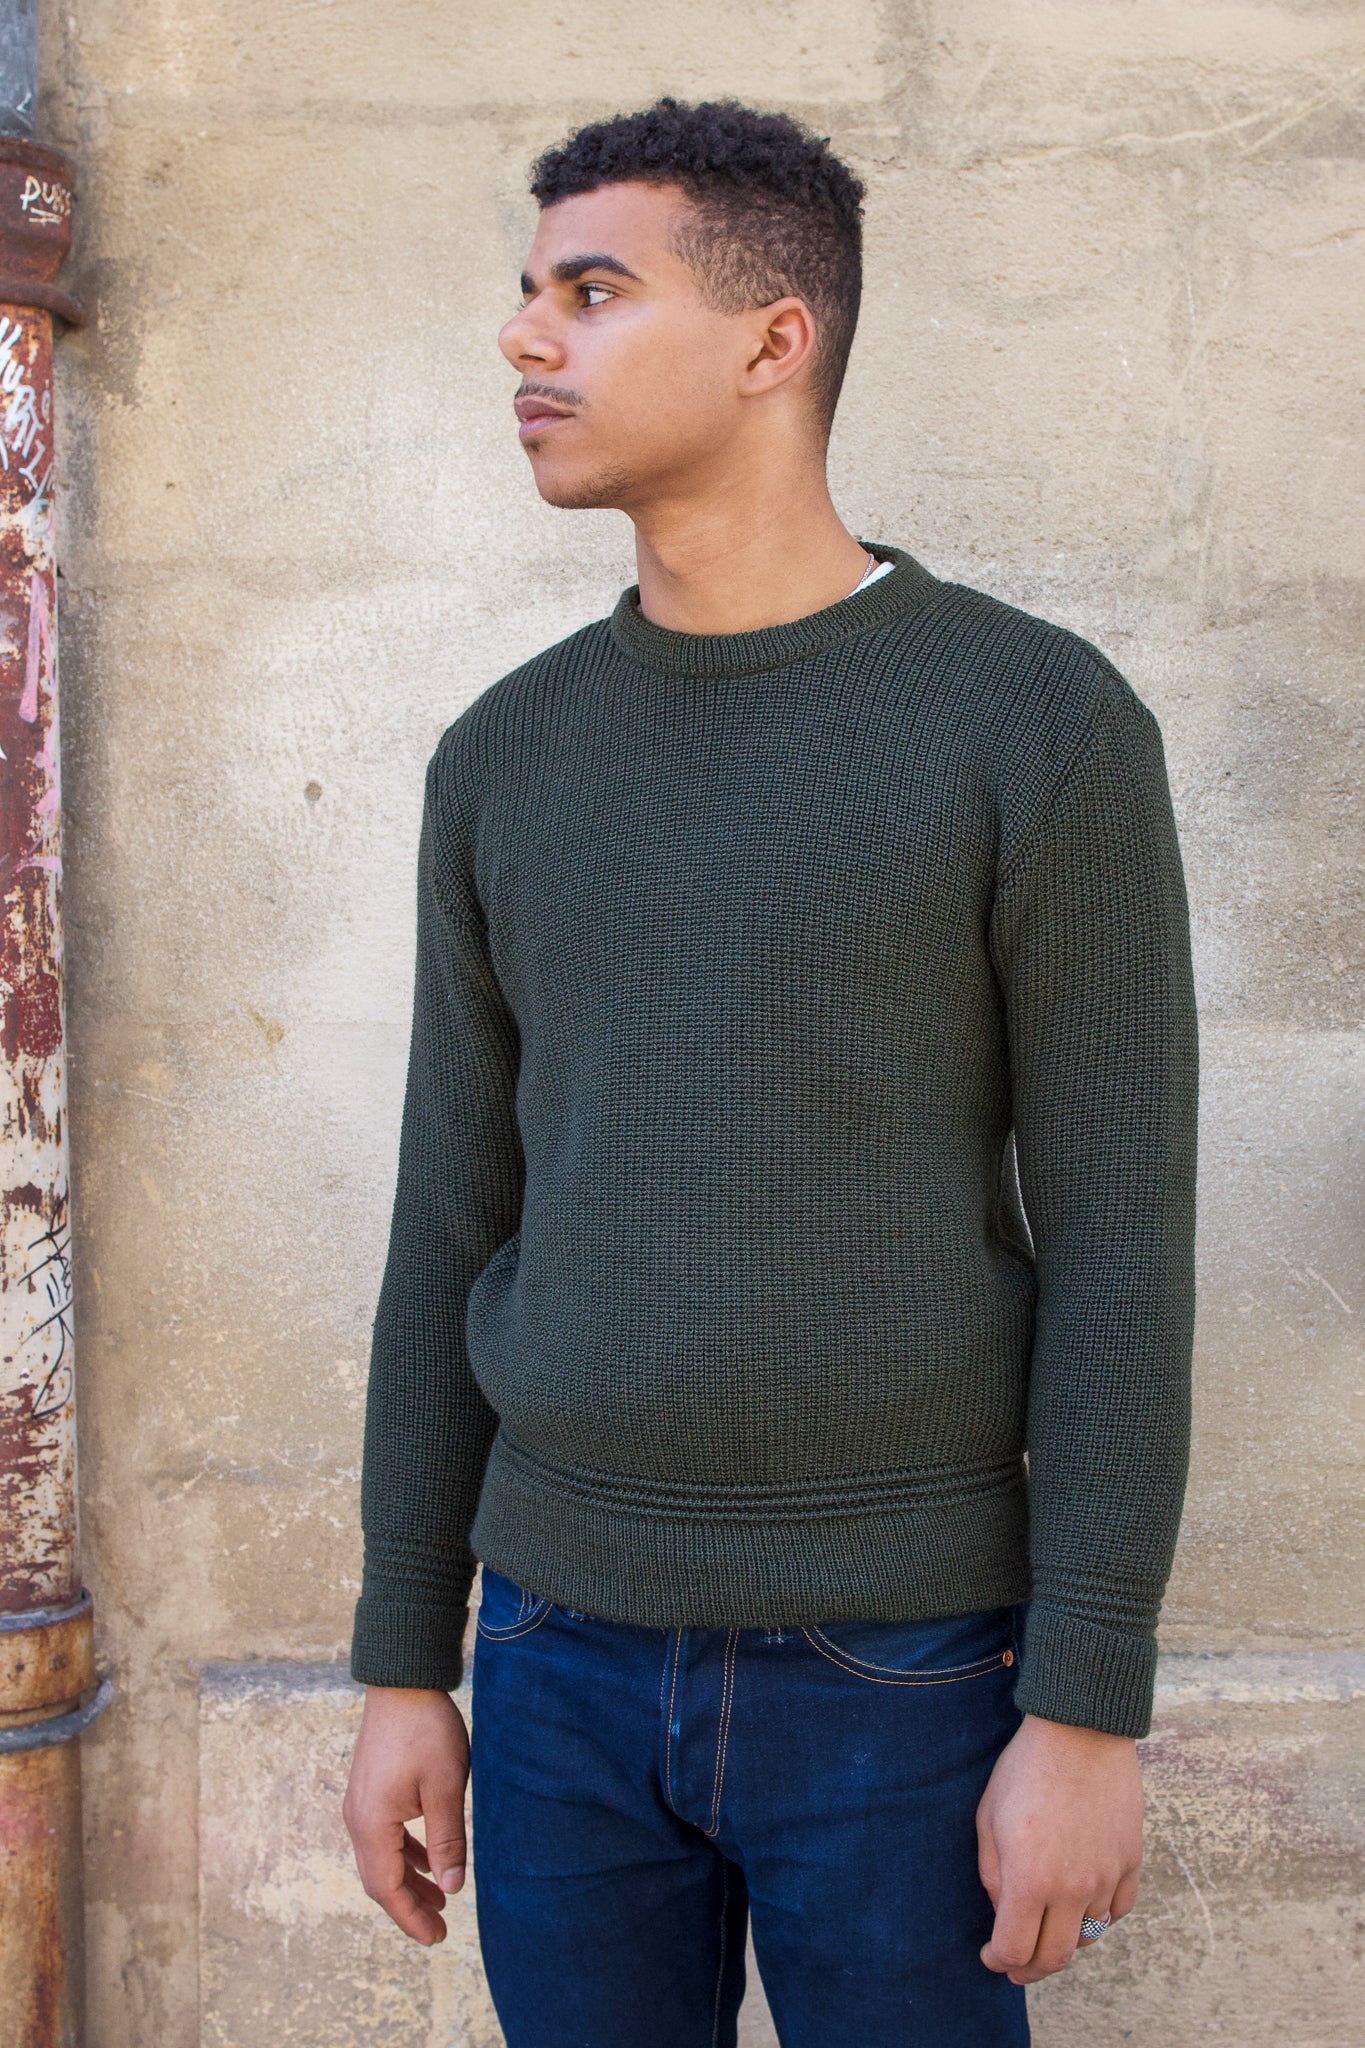 bleubrut – - Military Rundhals Green Sweater Wool Virgin